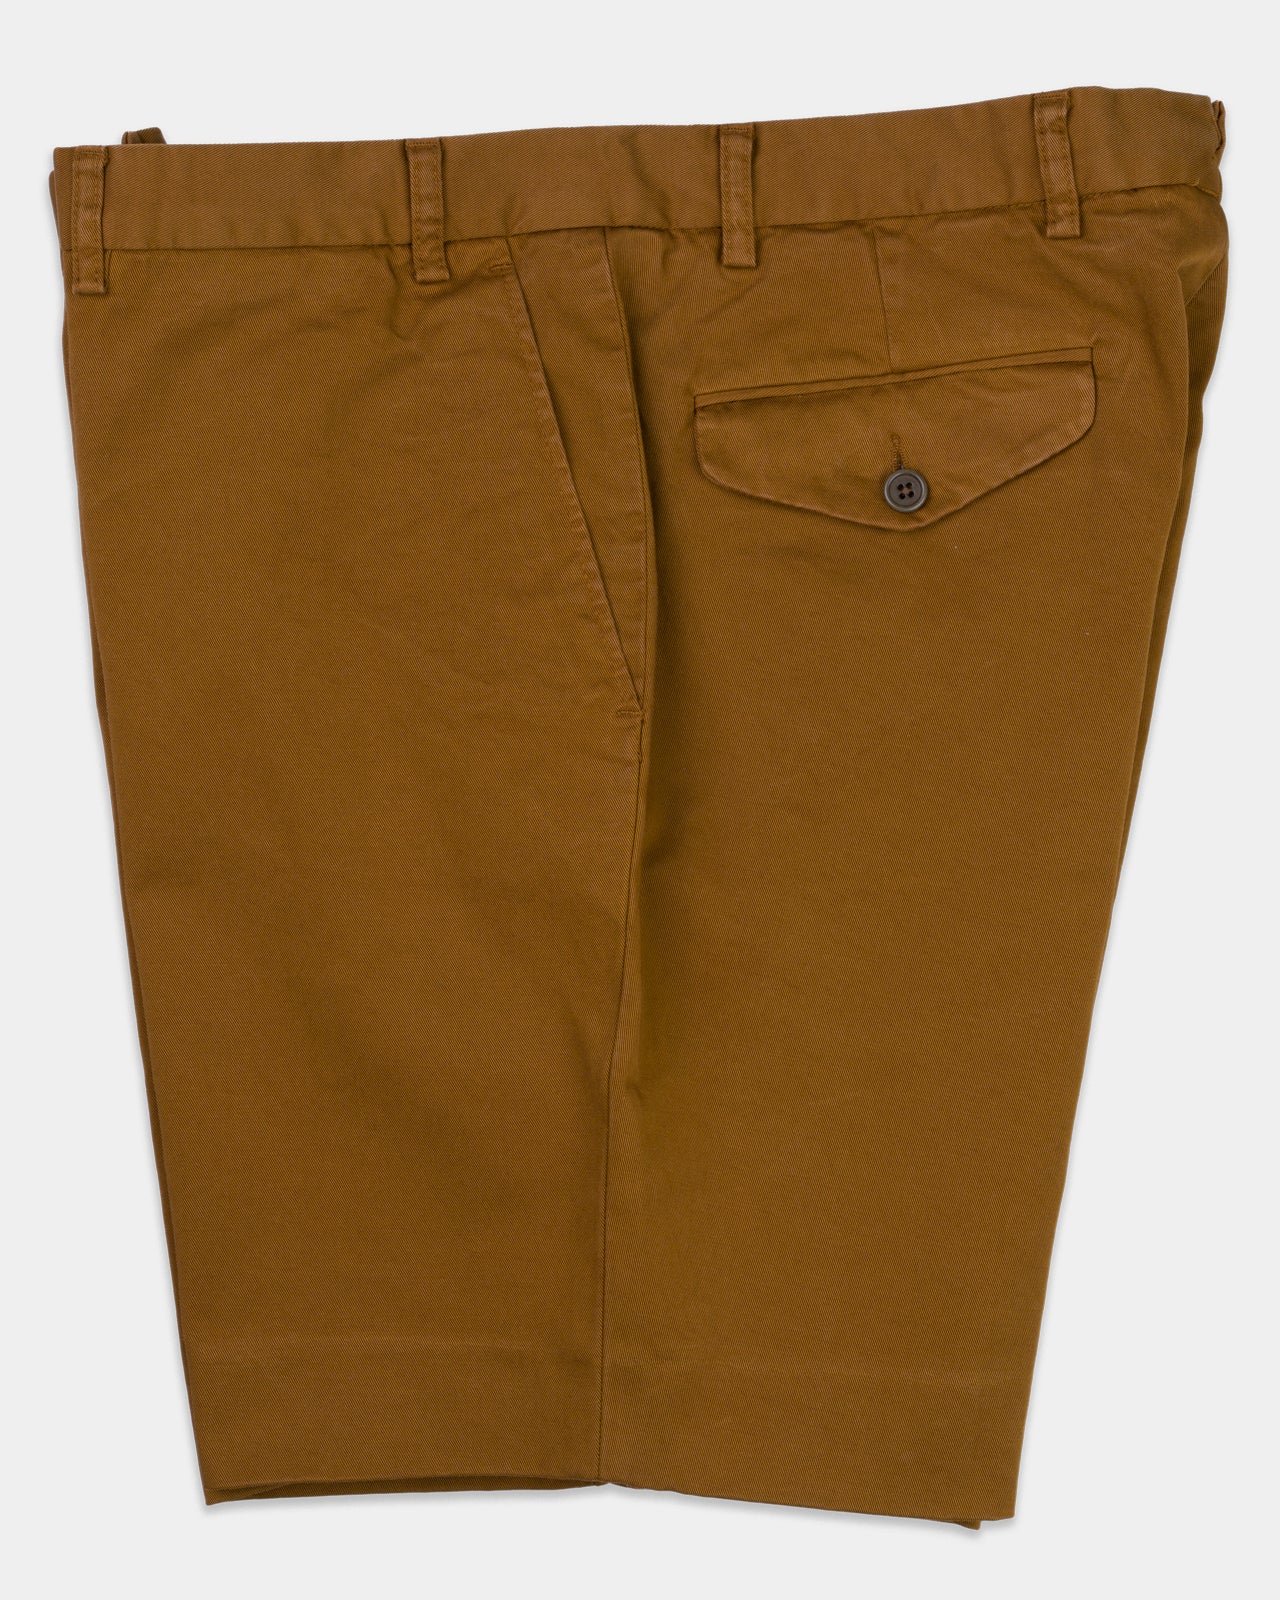 Monk's Robe Brown Shorts